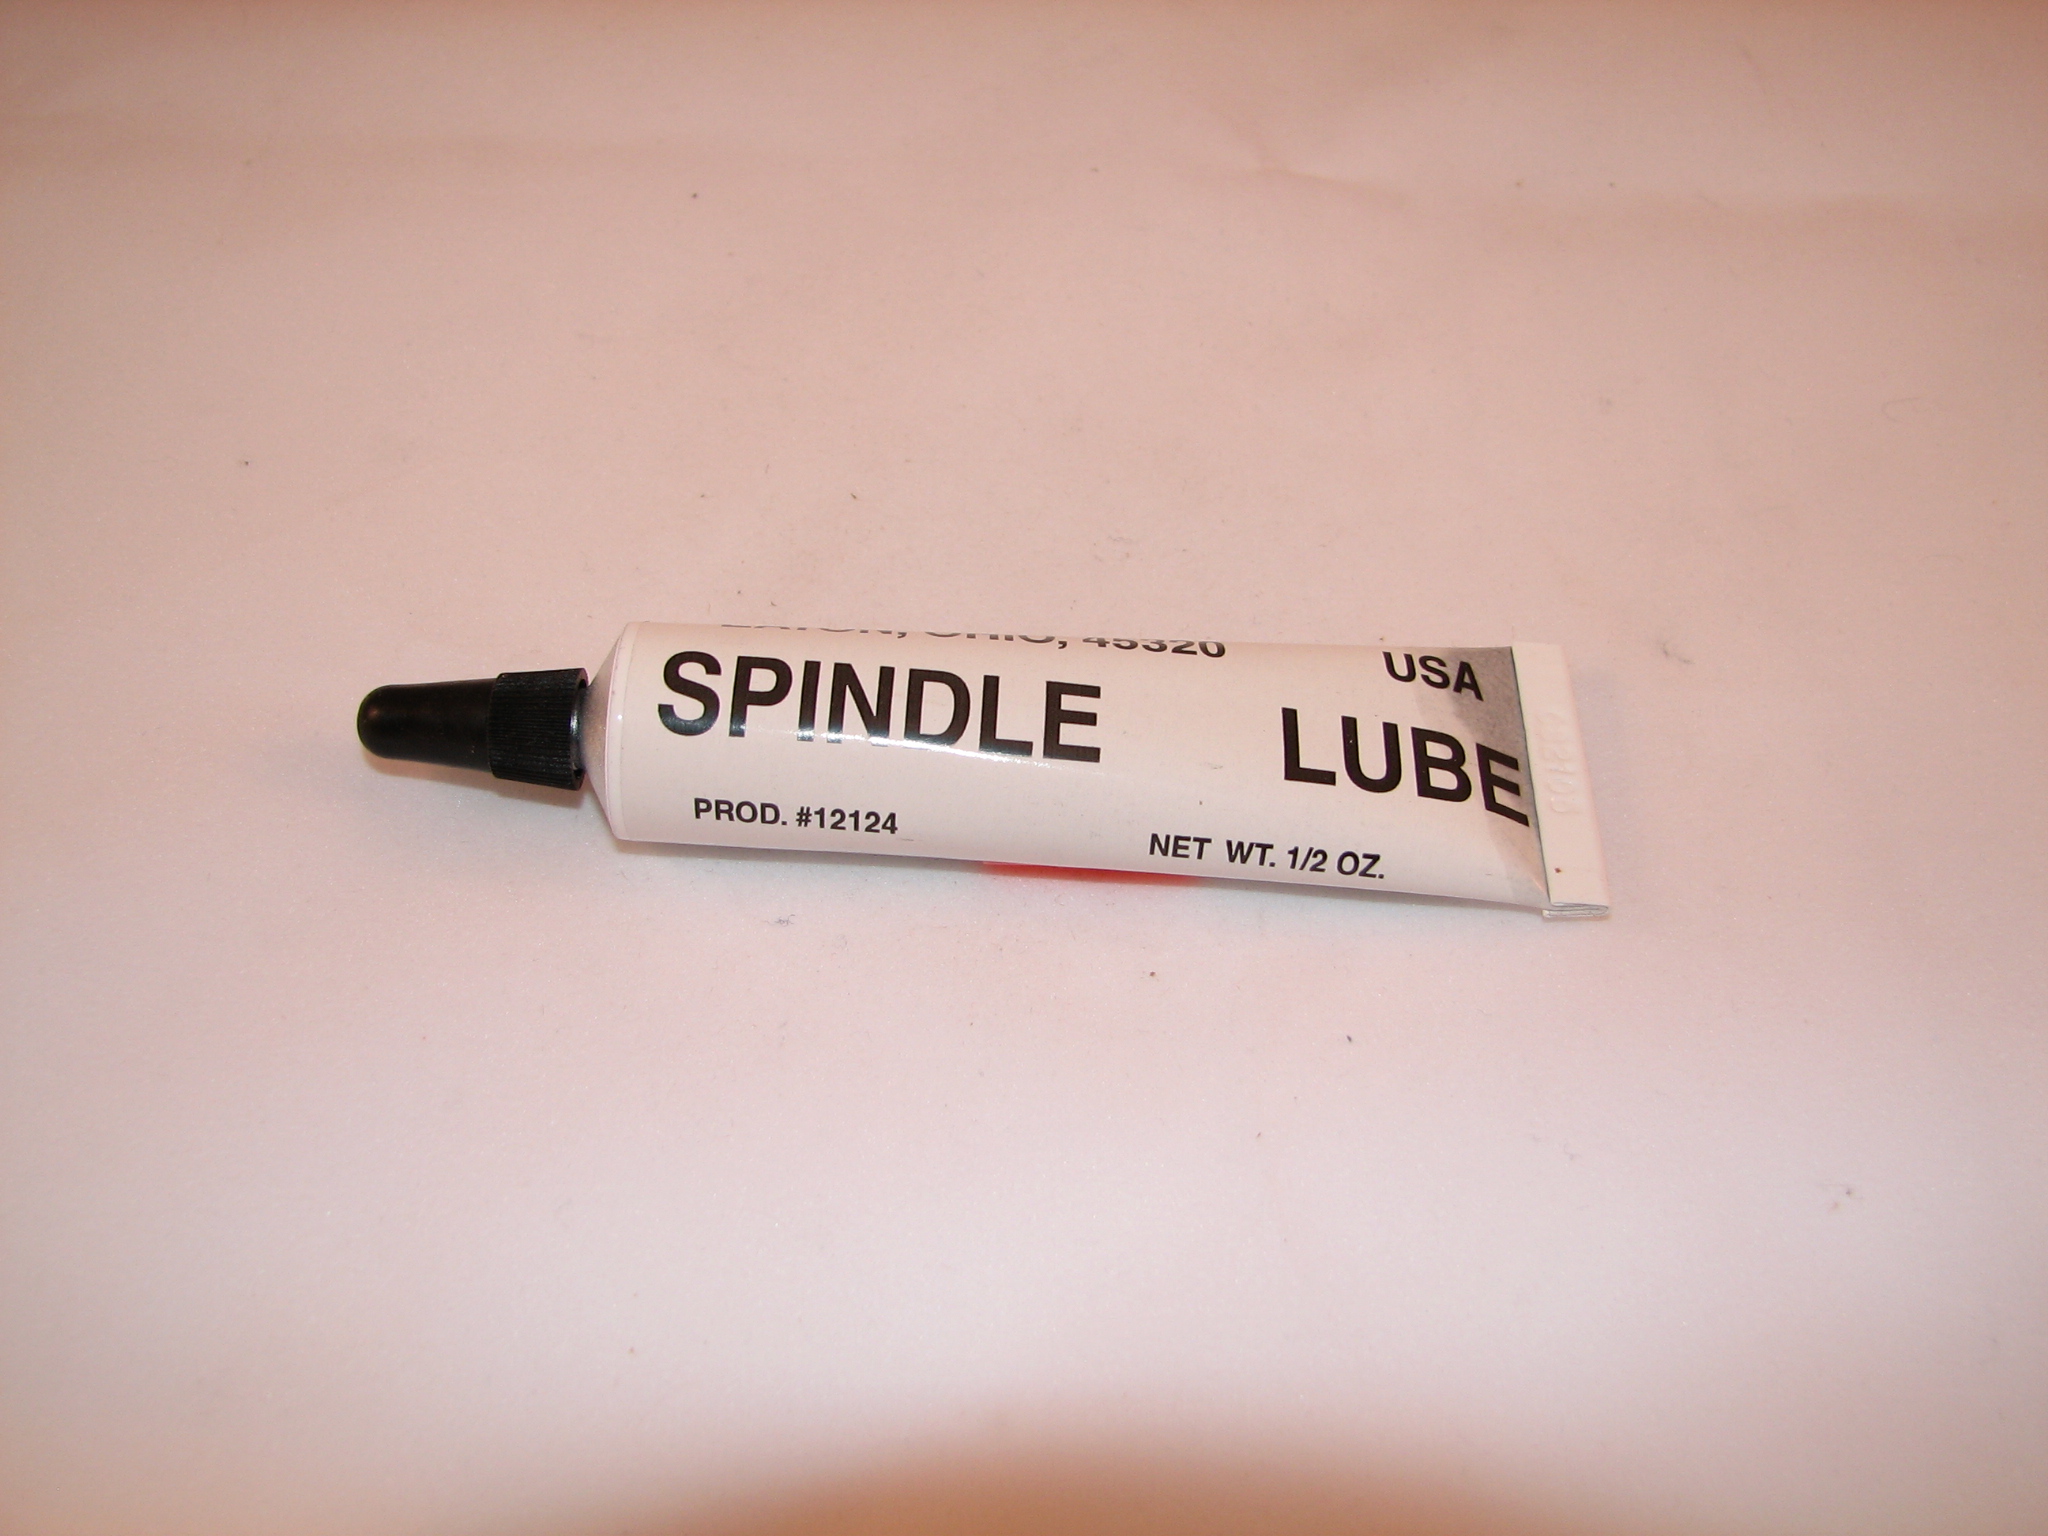 Spindle Lube 0.5 oz tube, 12124